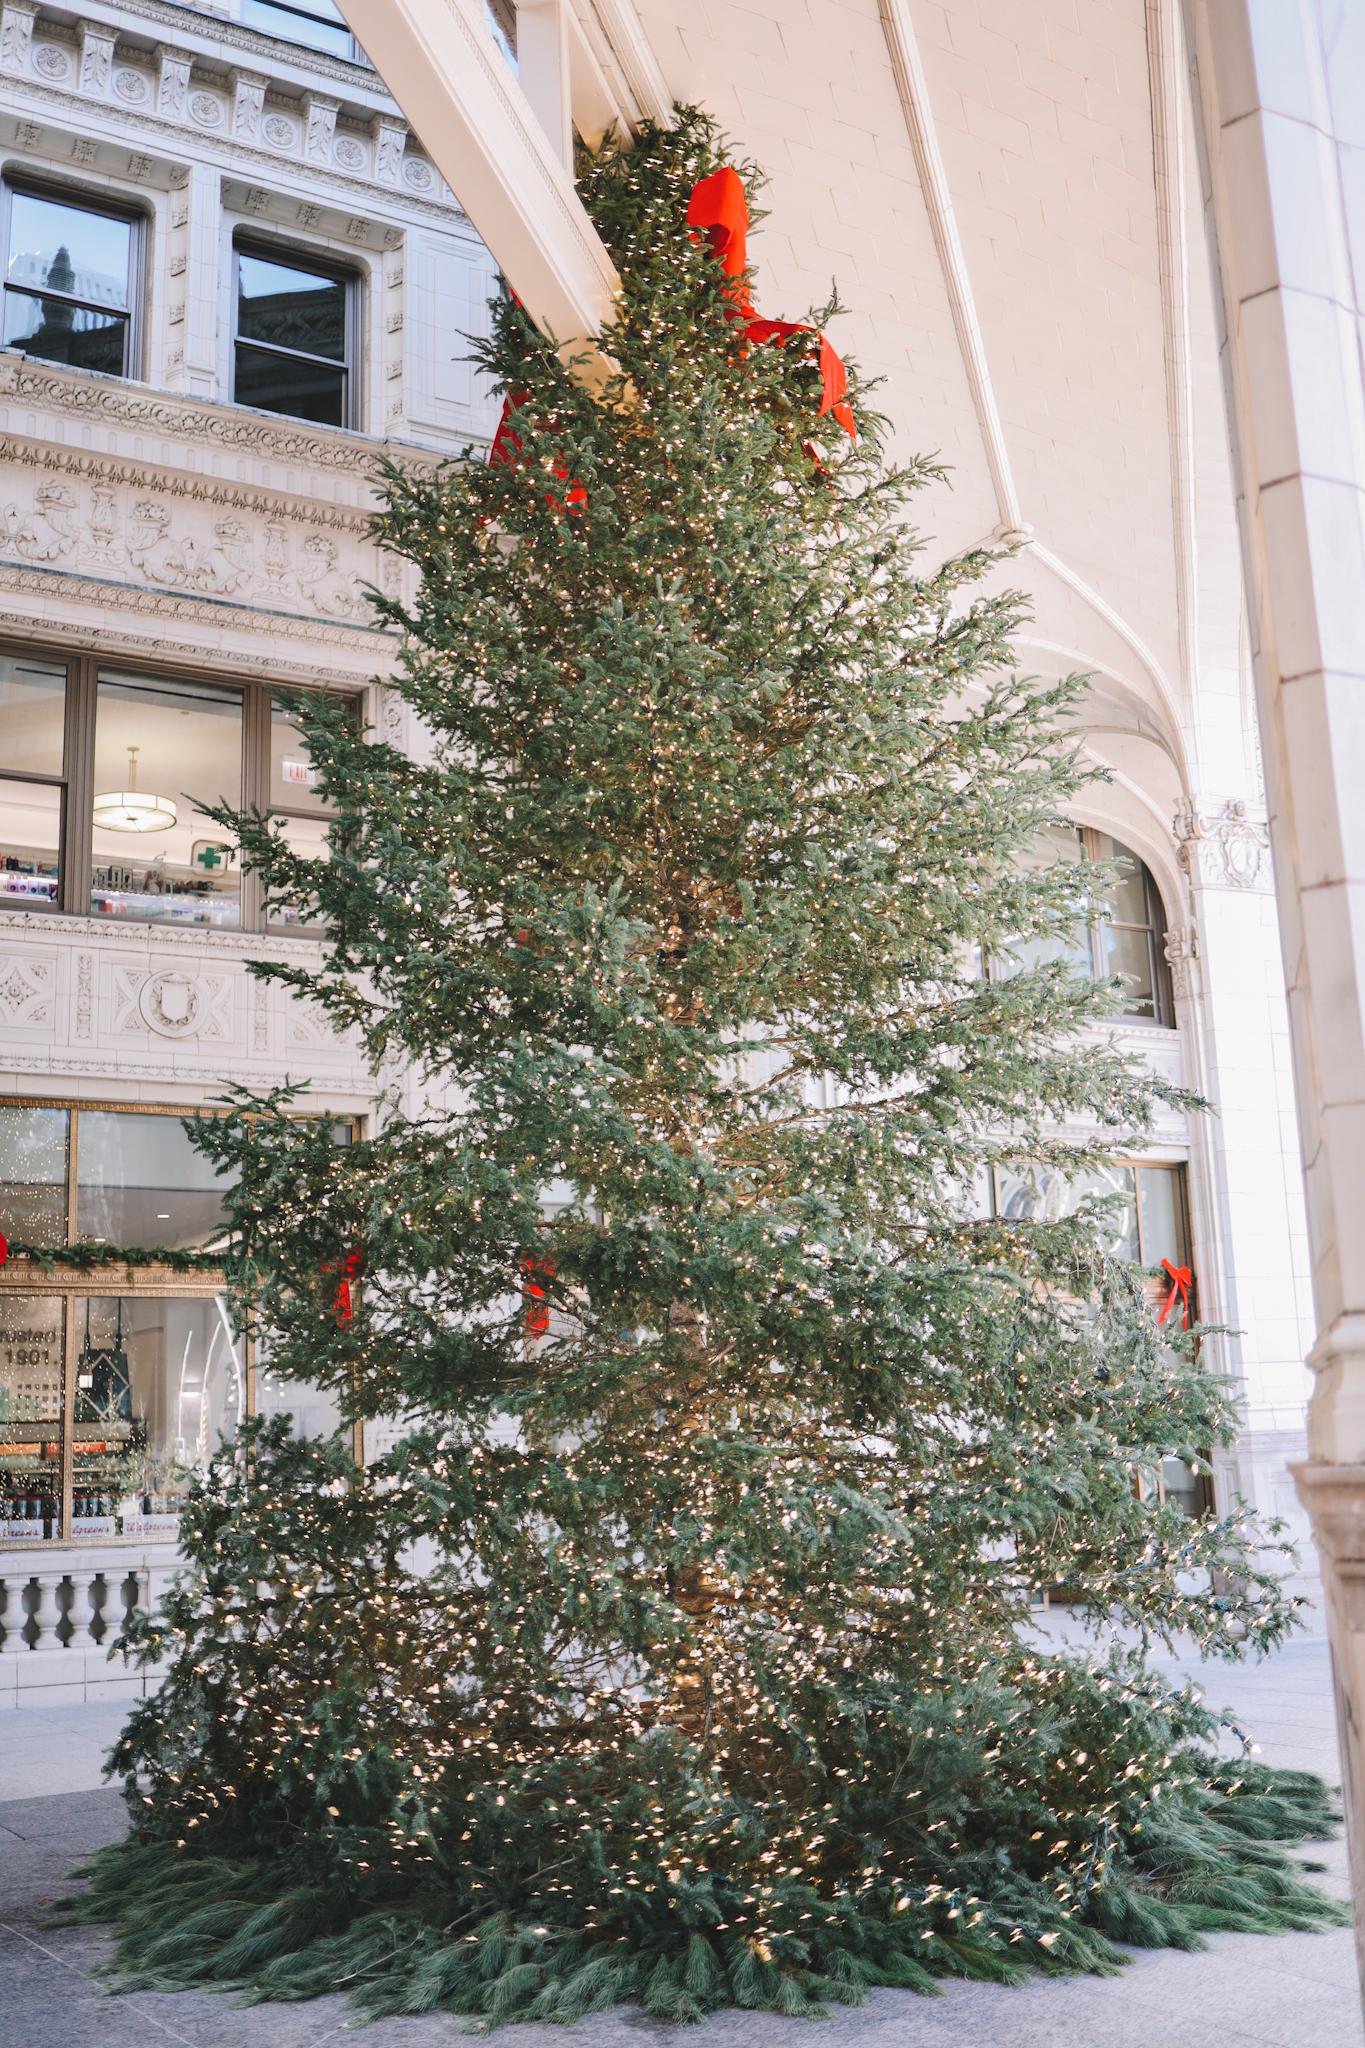 Chicago giant Christmas tree